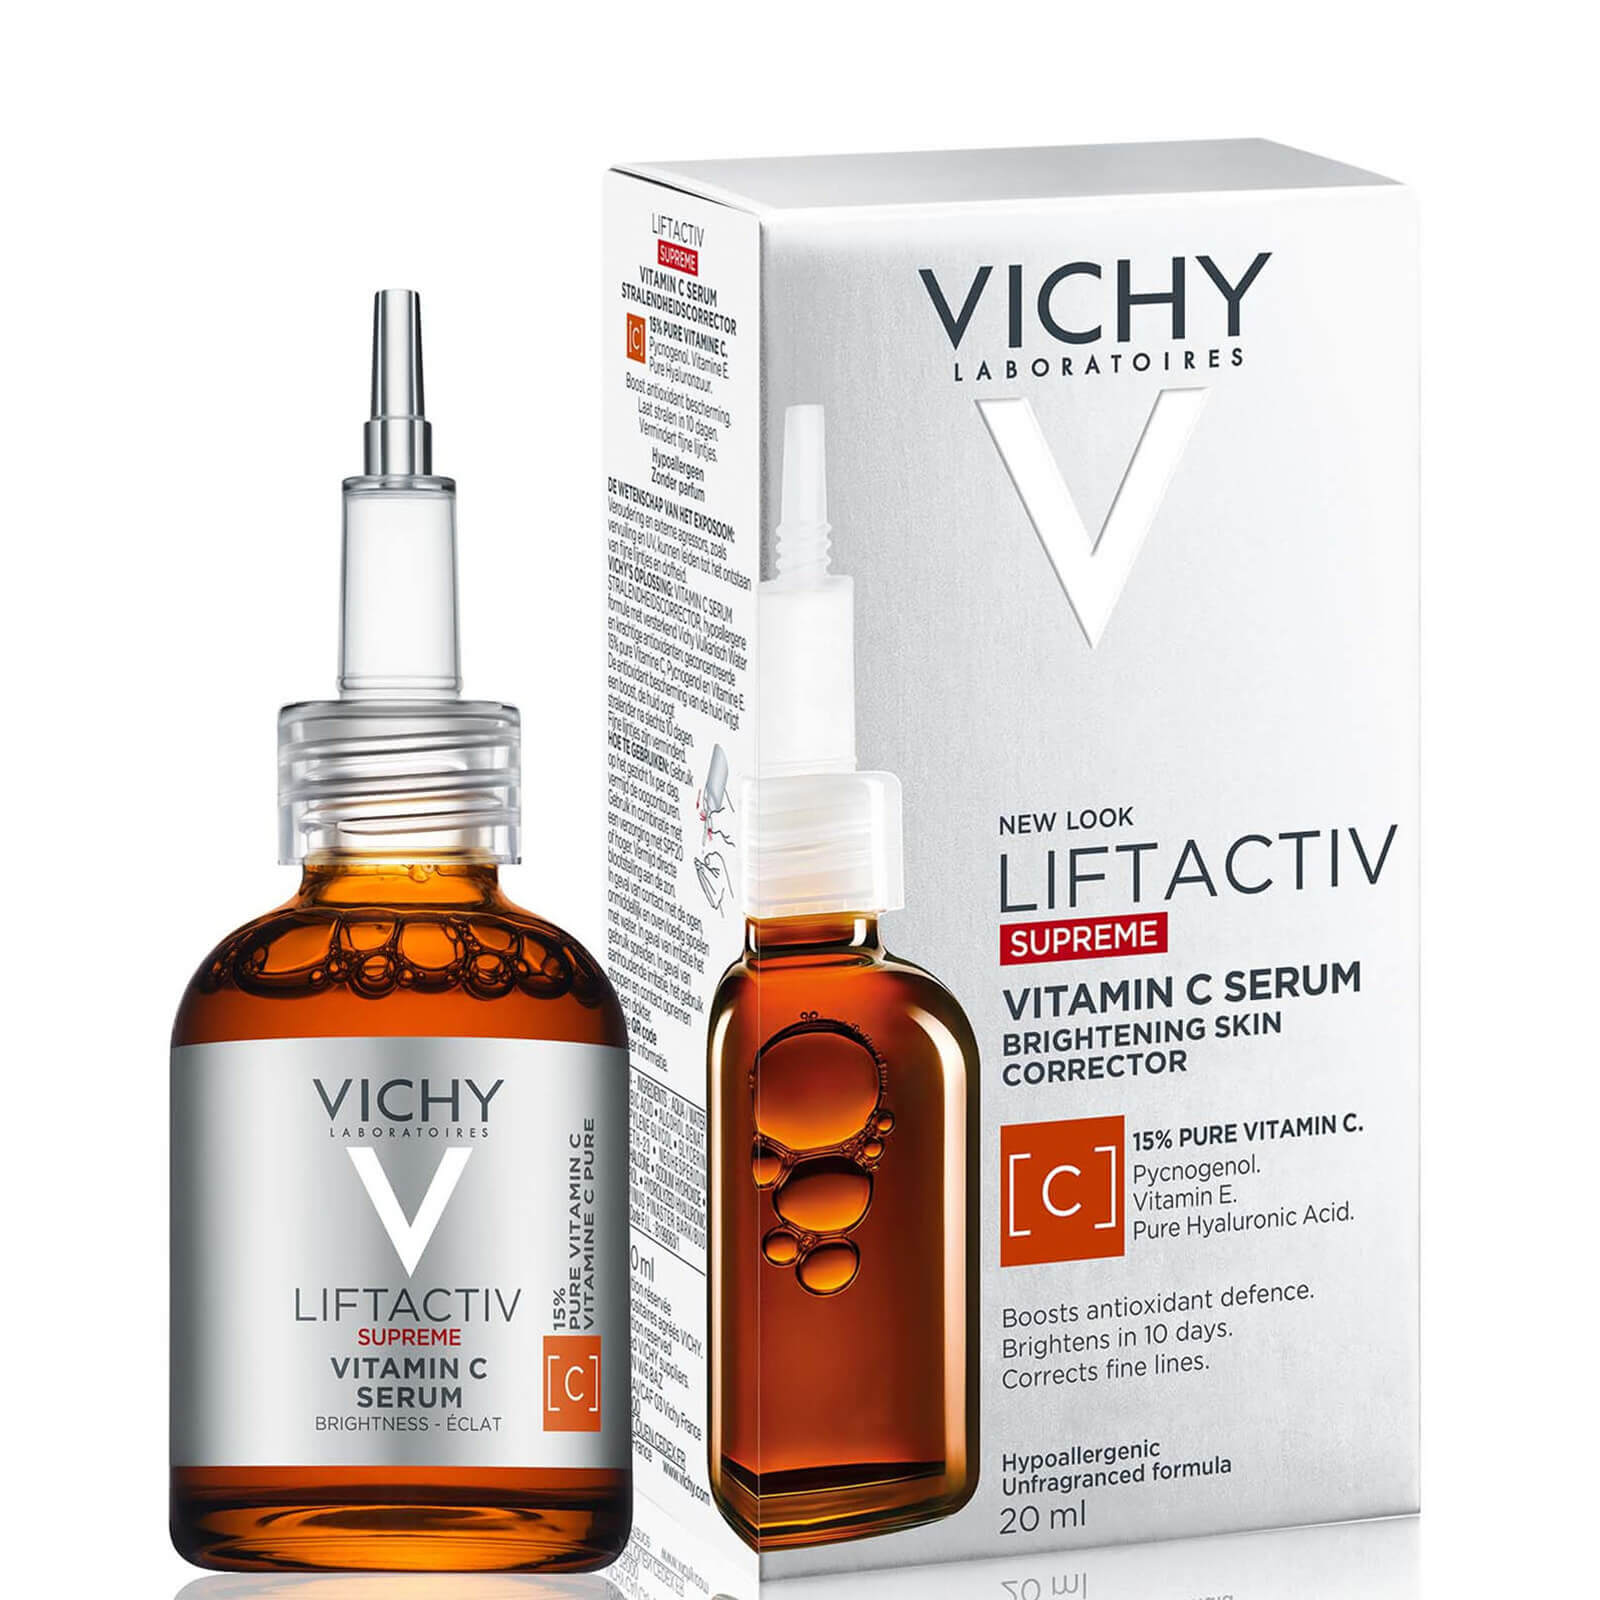 Vichy Liftactiv Brightening And Anti-aging Vitamin C Serum With 15% Pure Vitamin C (0.67 Fl. Oz.)